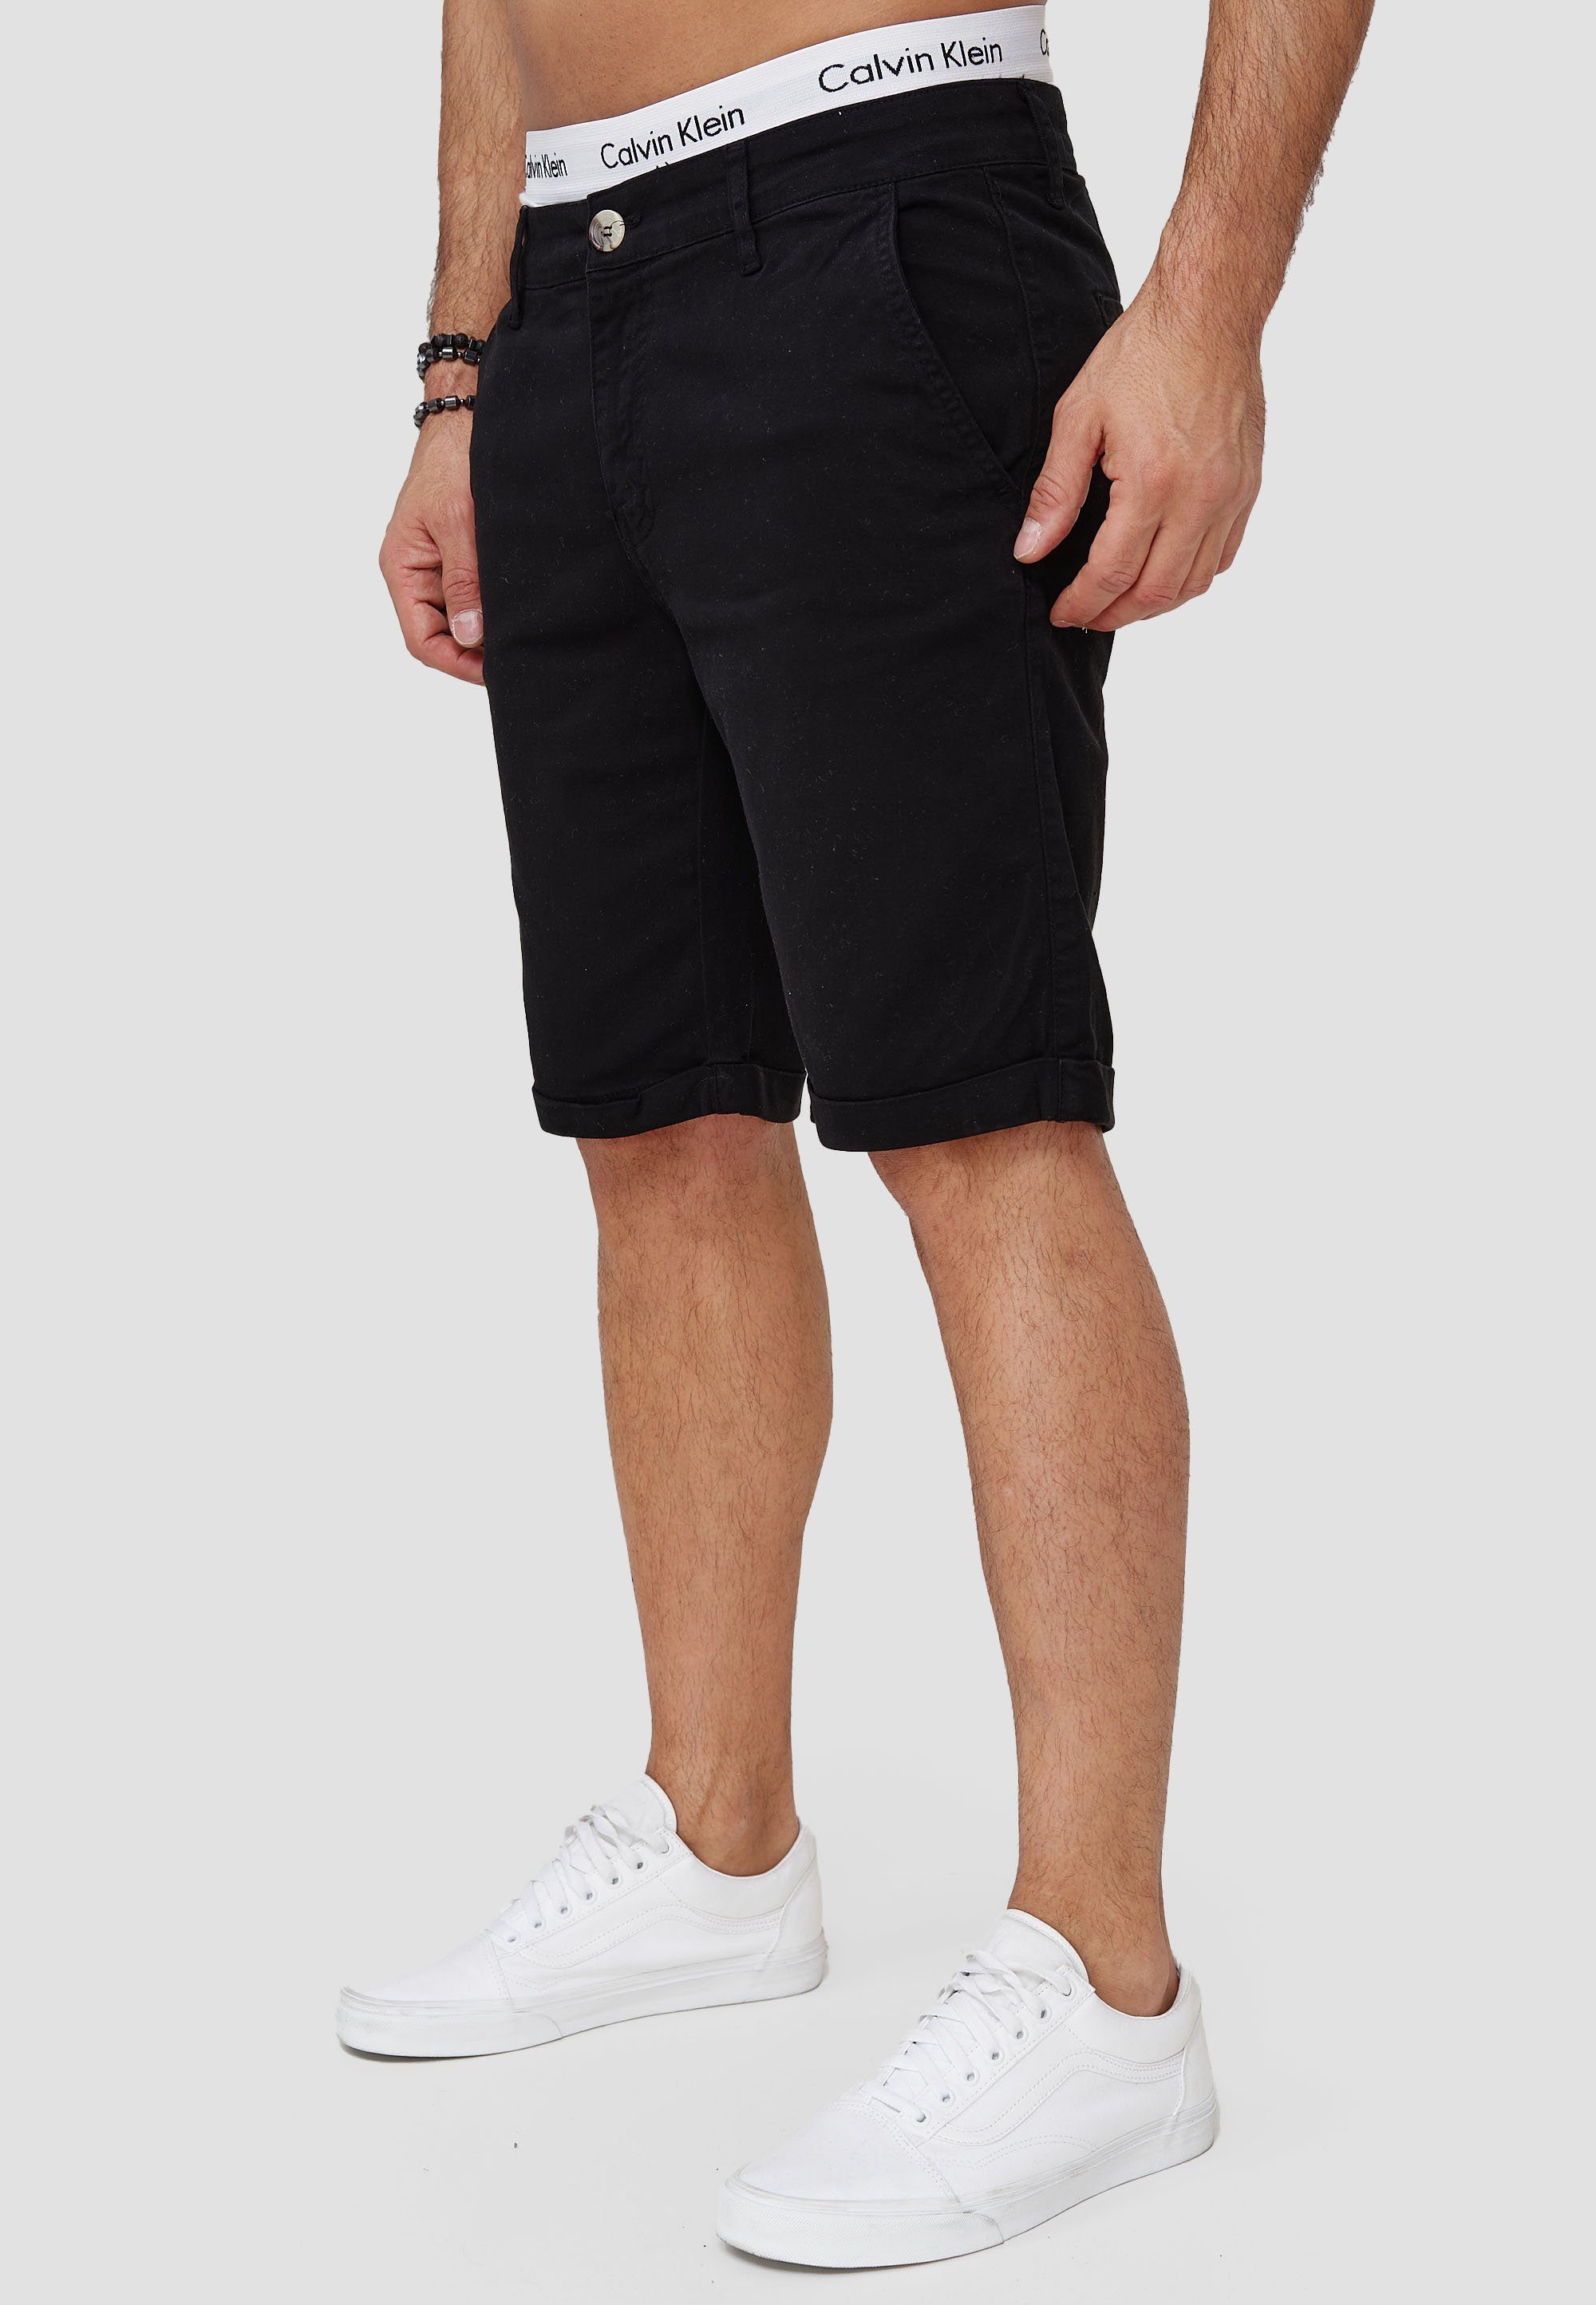 Casual im 1-tlg., modischem Fitness Hose SH-3364 Shorts OneRedox Bermudas Freizeit Schwarz Sweatpants, Design) (Kurze